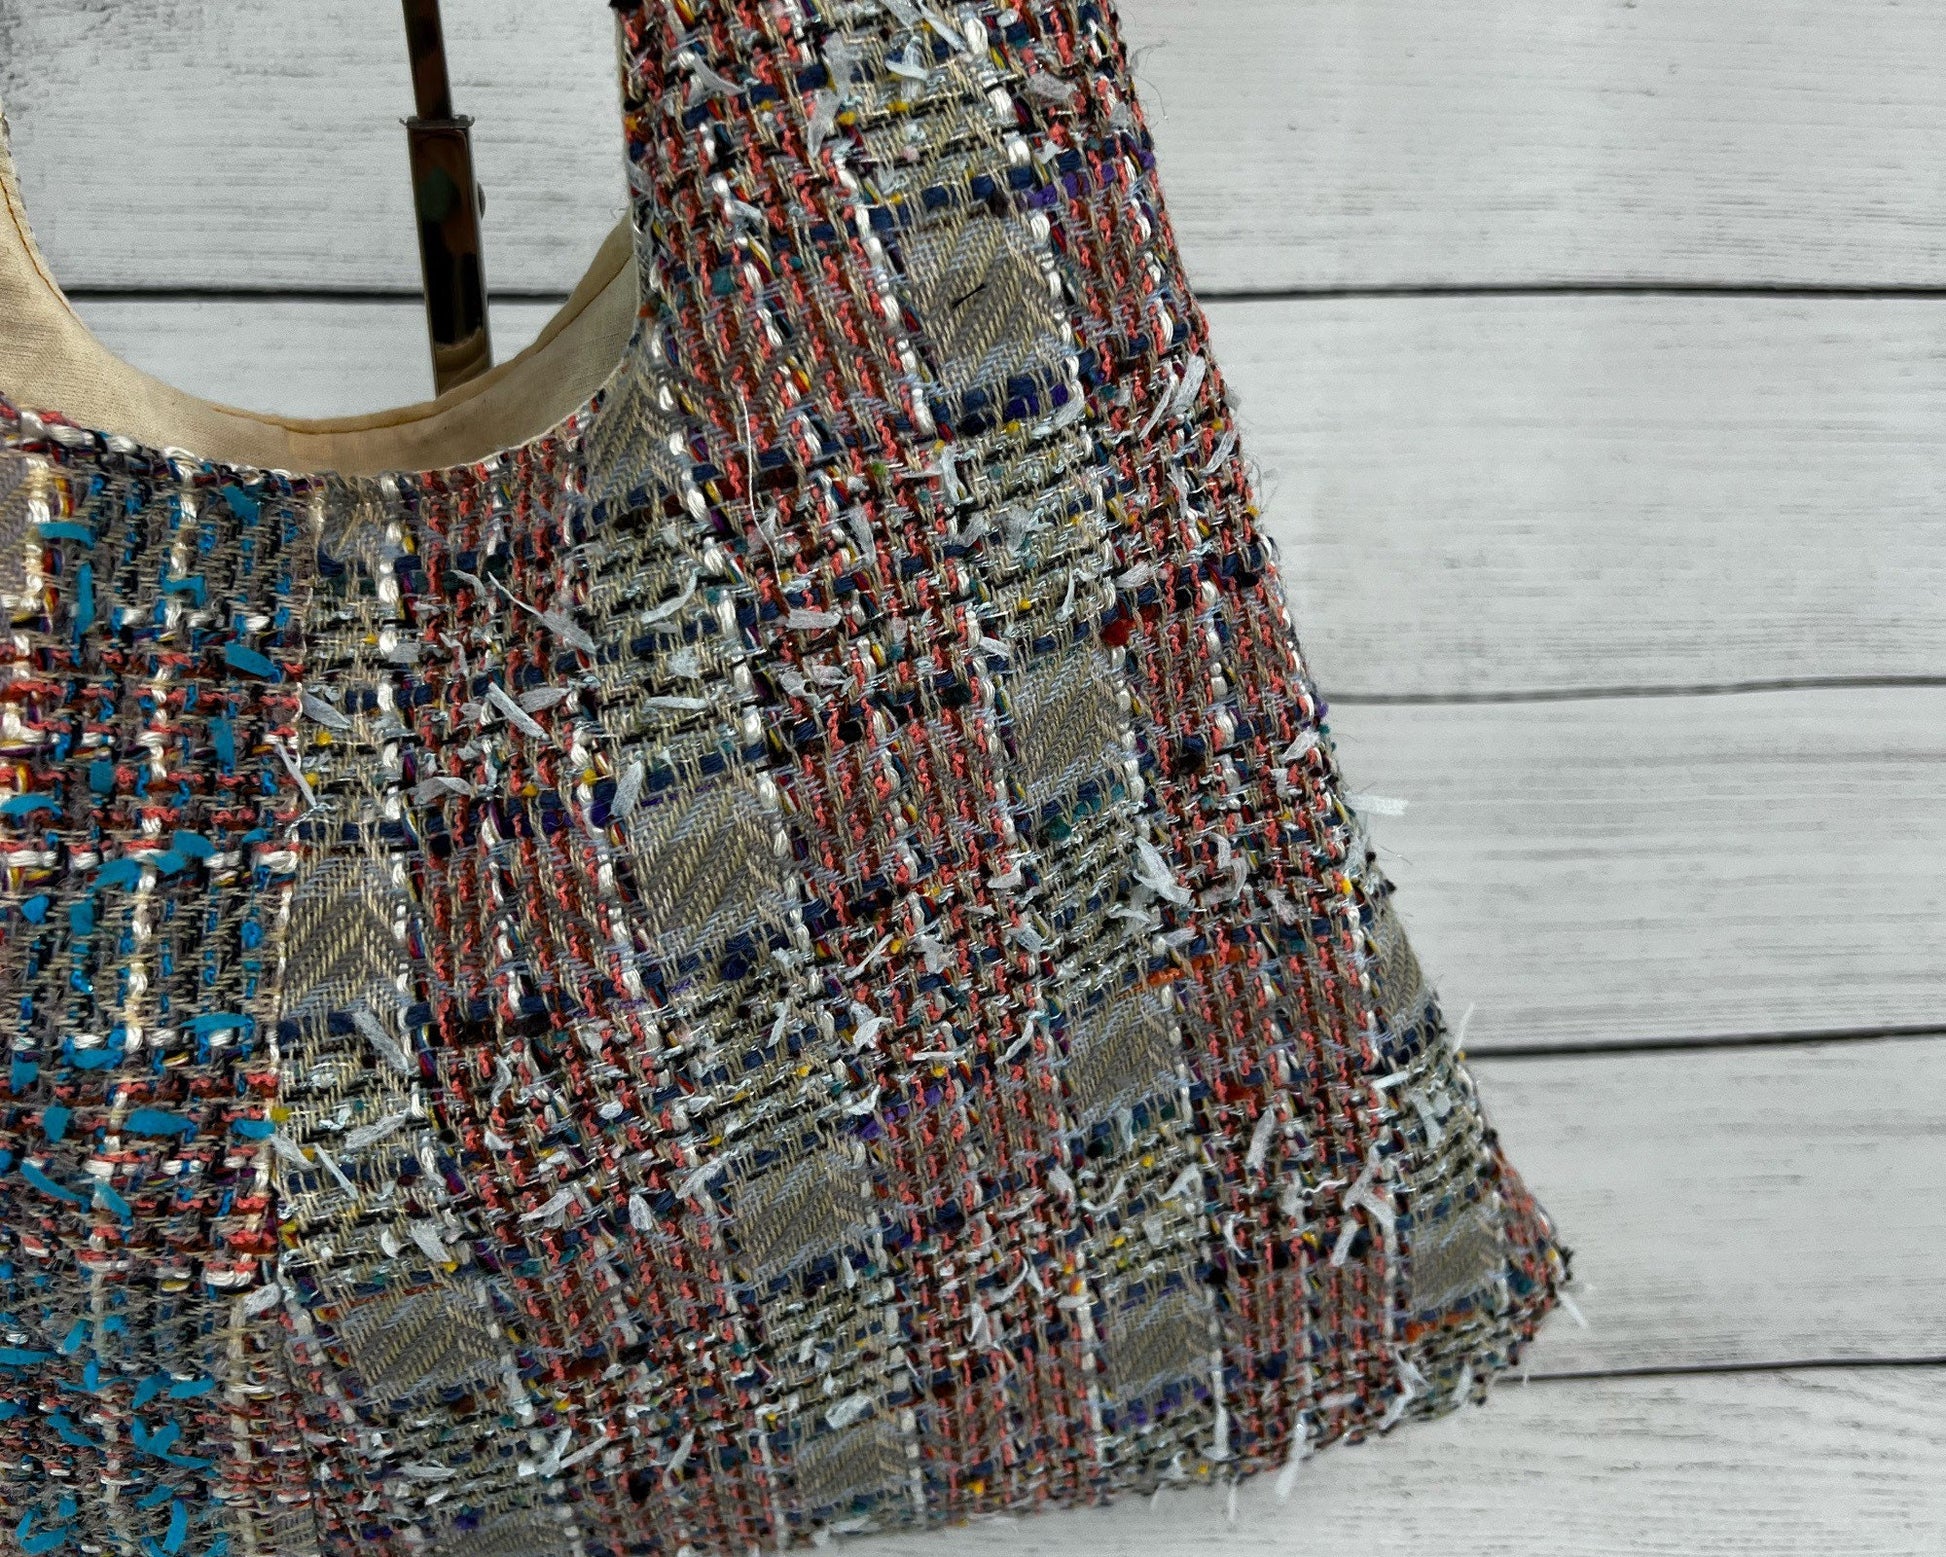 Linton Tweed Fabric One of a Kind Hobo Tote with two pieces of Tweed-  Handbag - Unique Bag - Cool Hobo - Fun Tote - Smaller Hobo - Shoulder